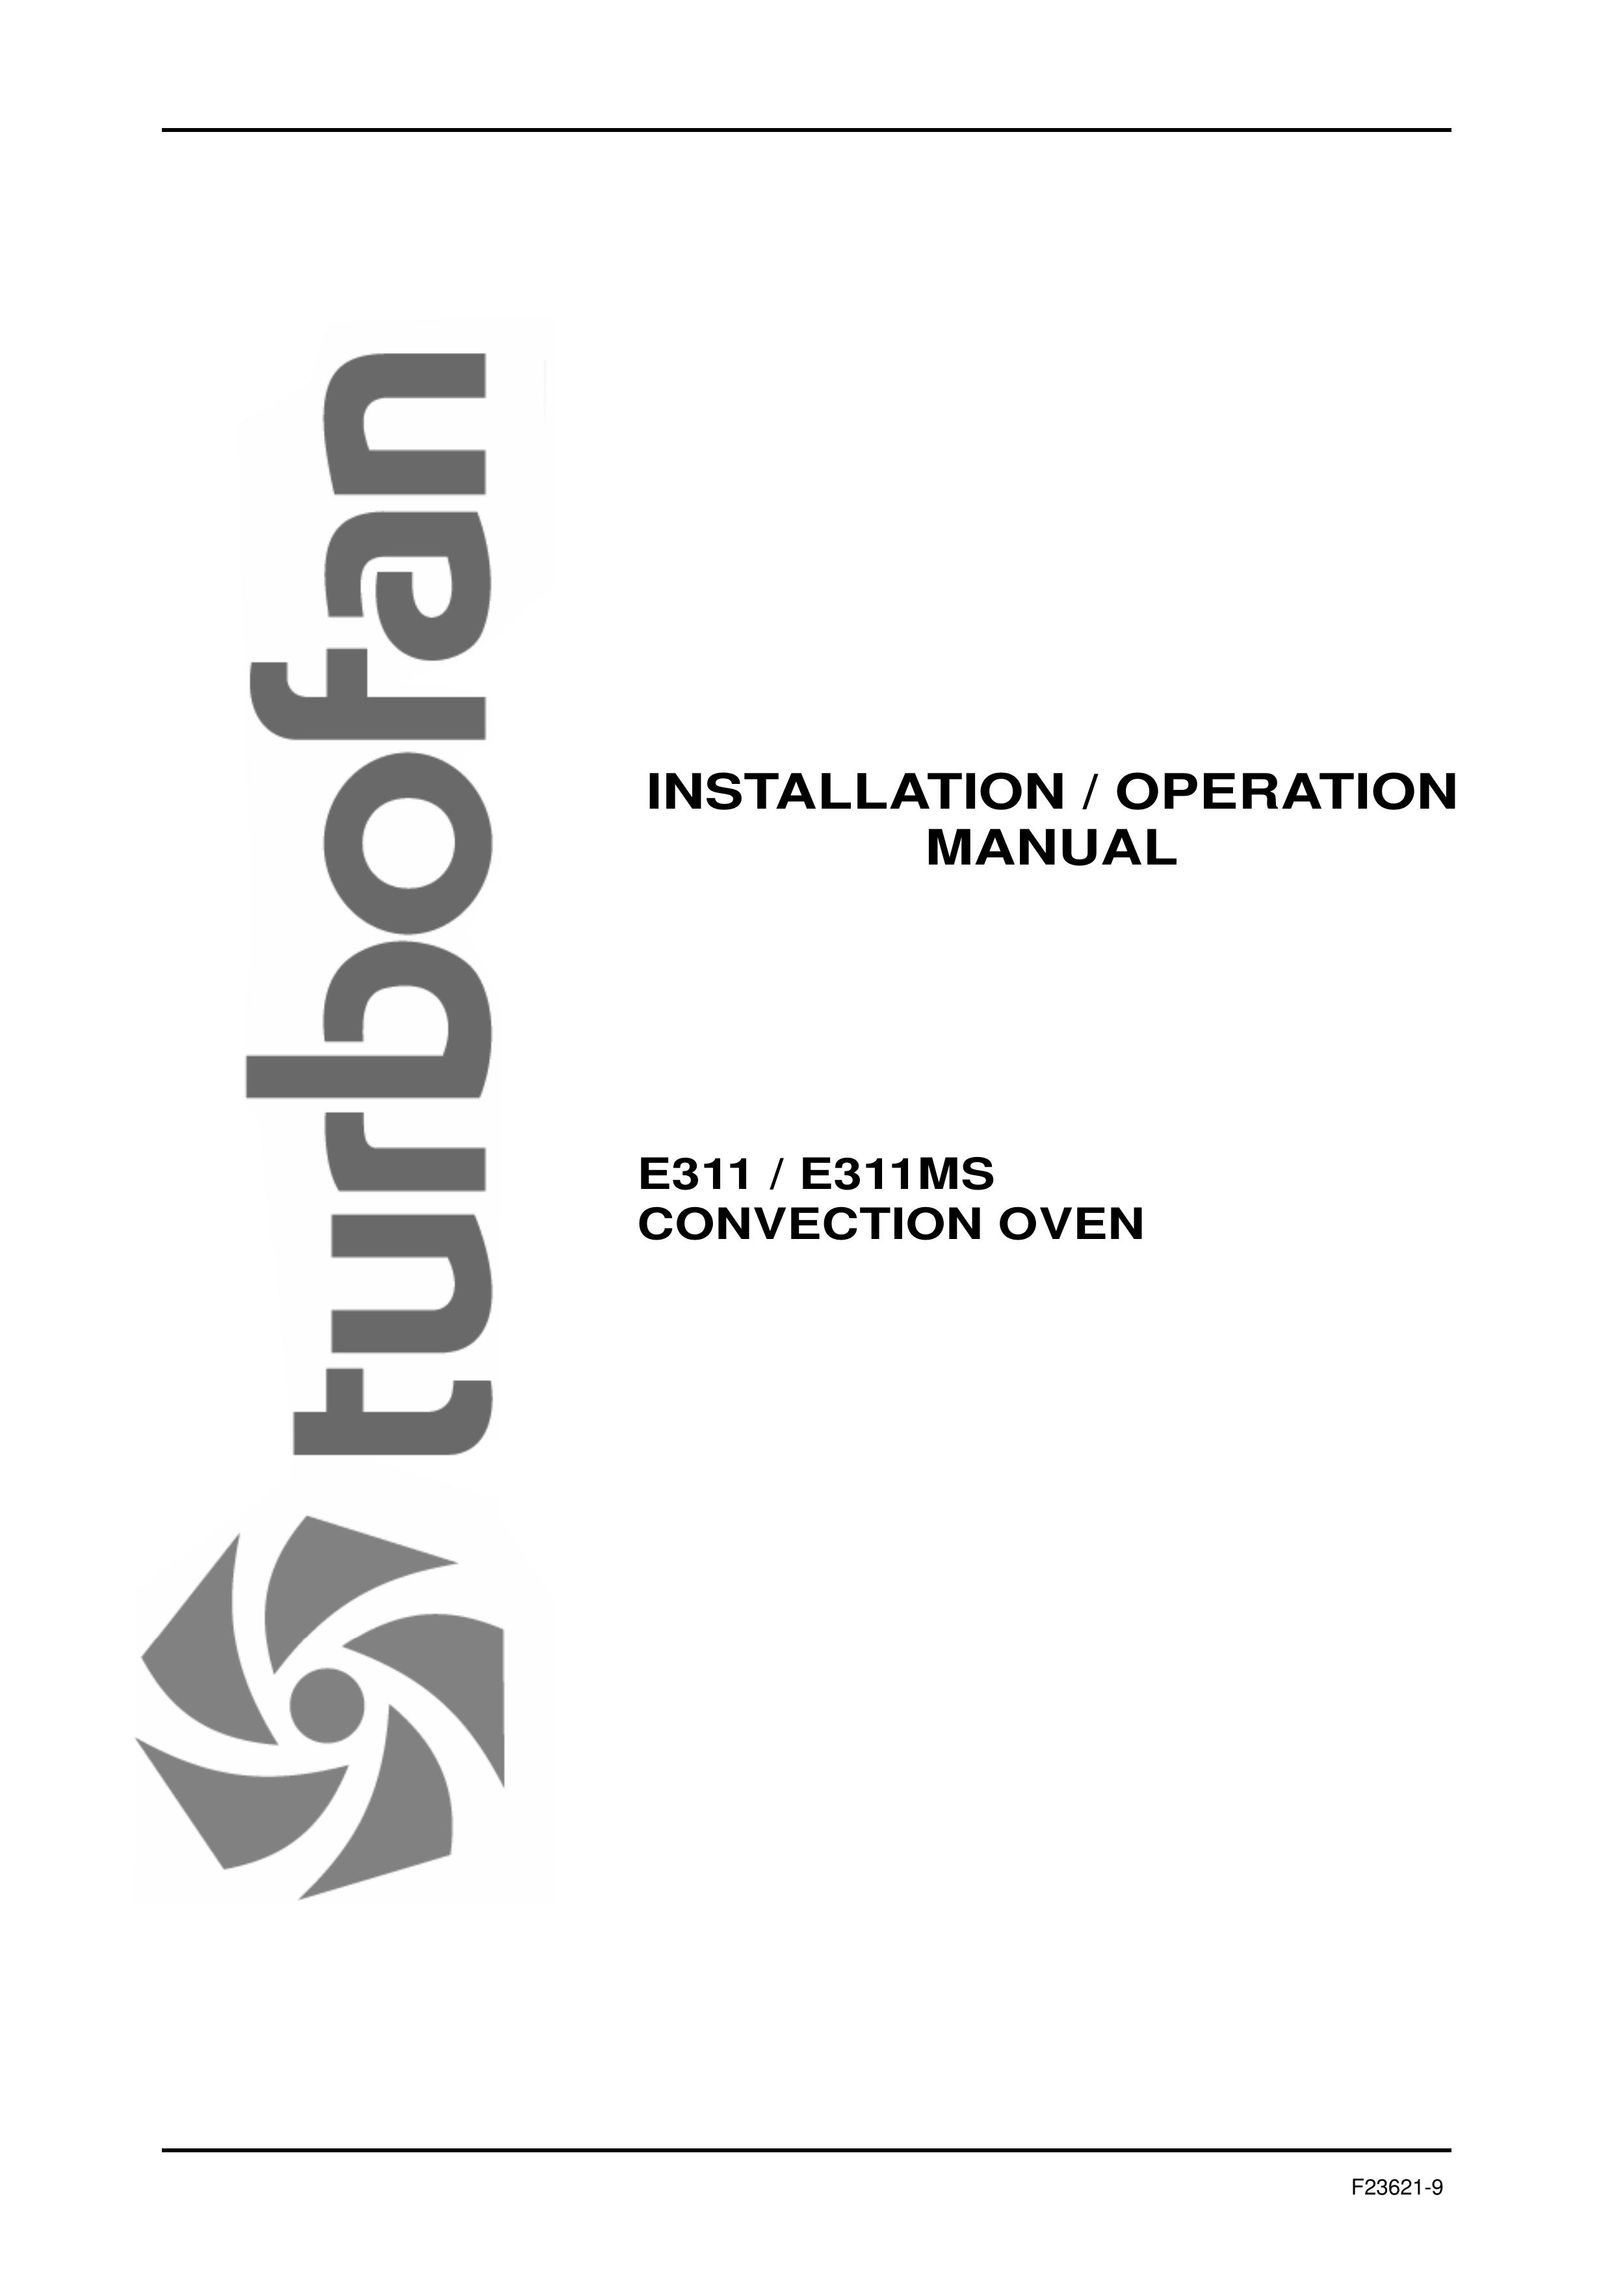 Moffat E311MS Convection Oven User Manual